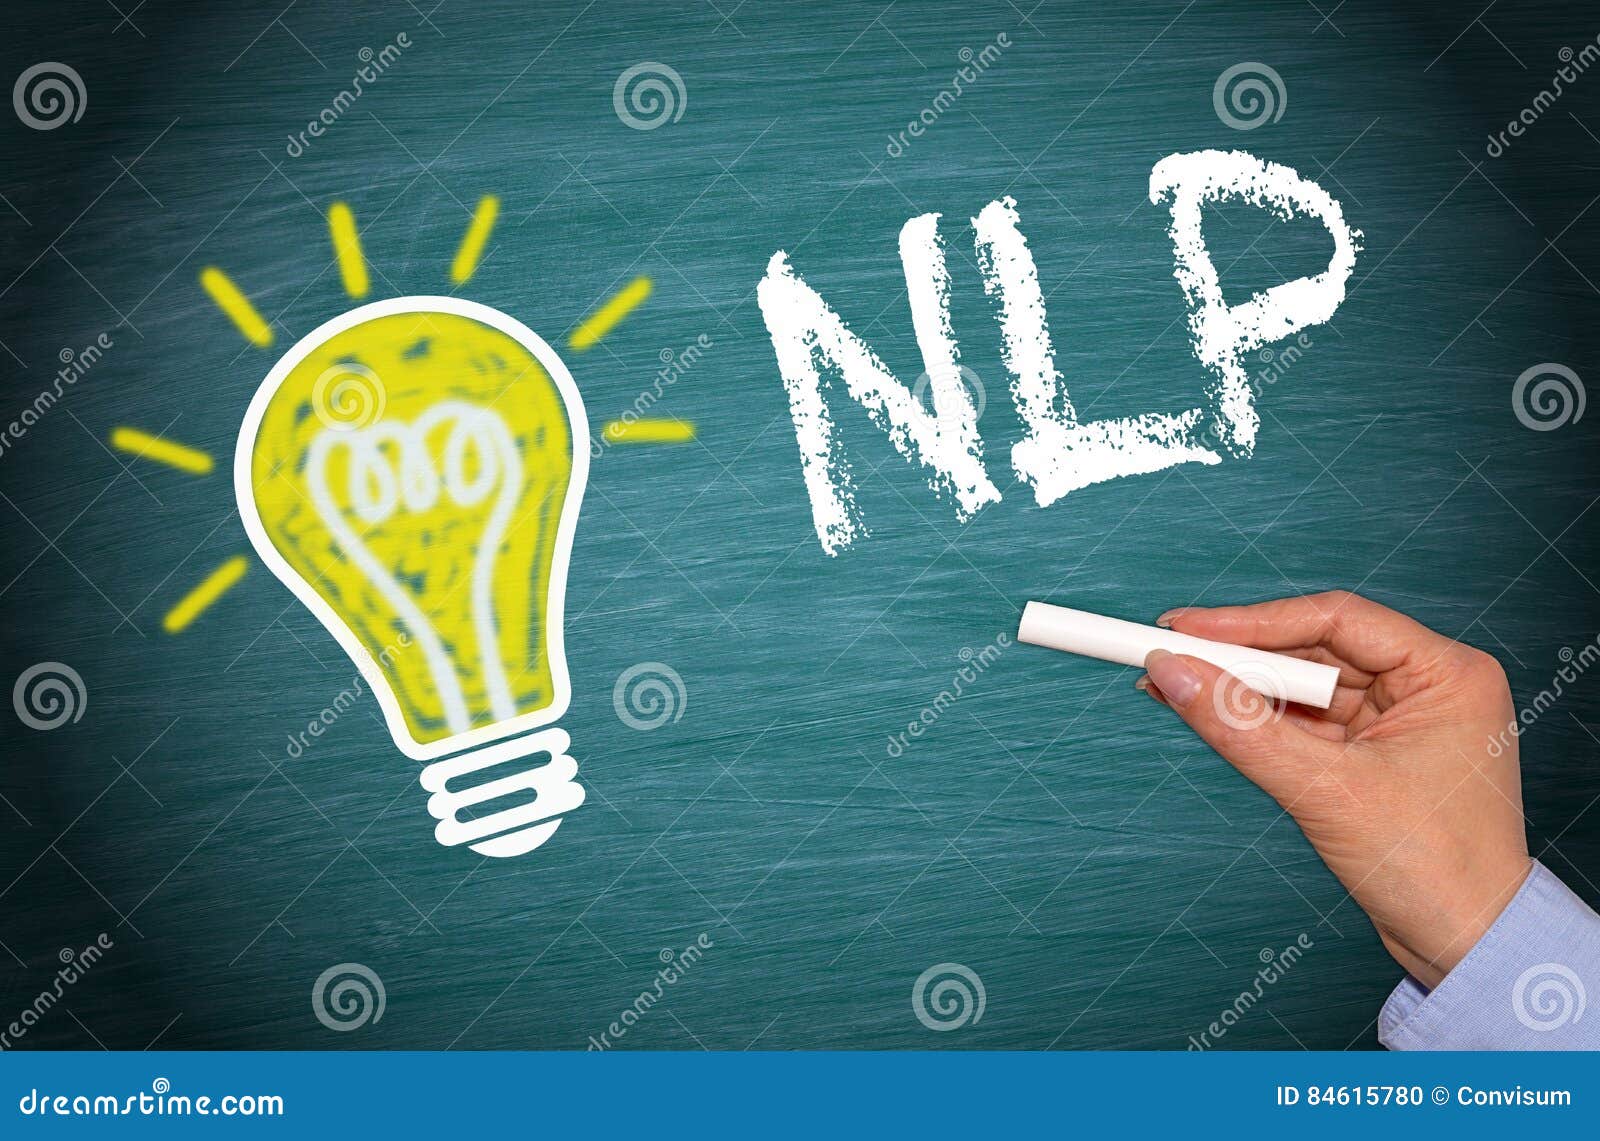 nlp - neuro linguistic programming